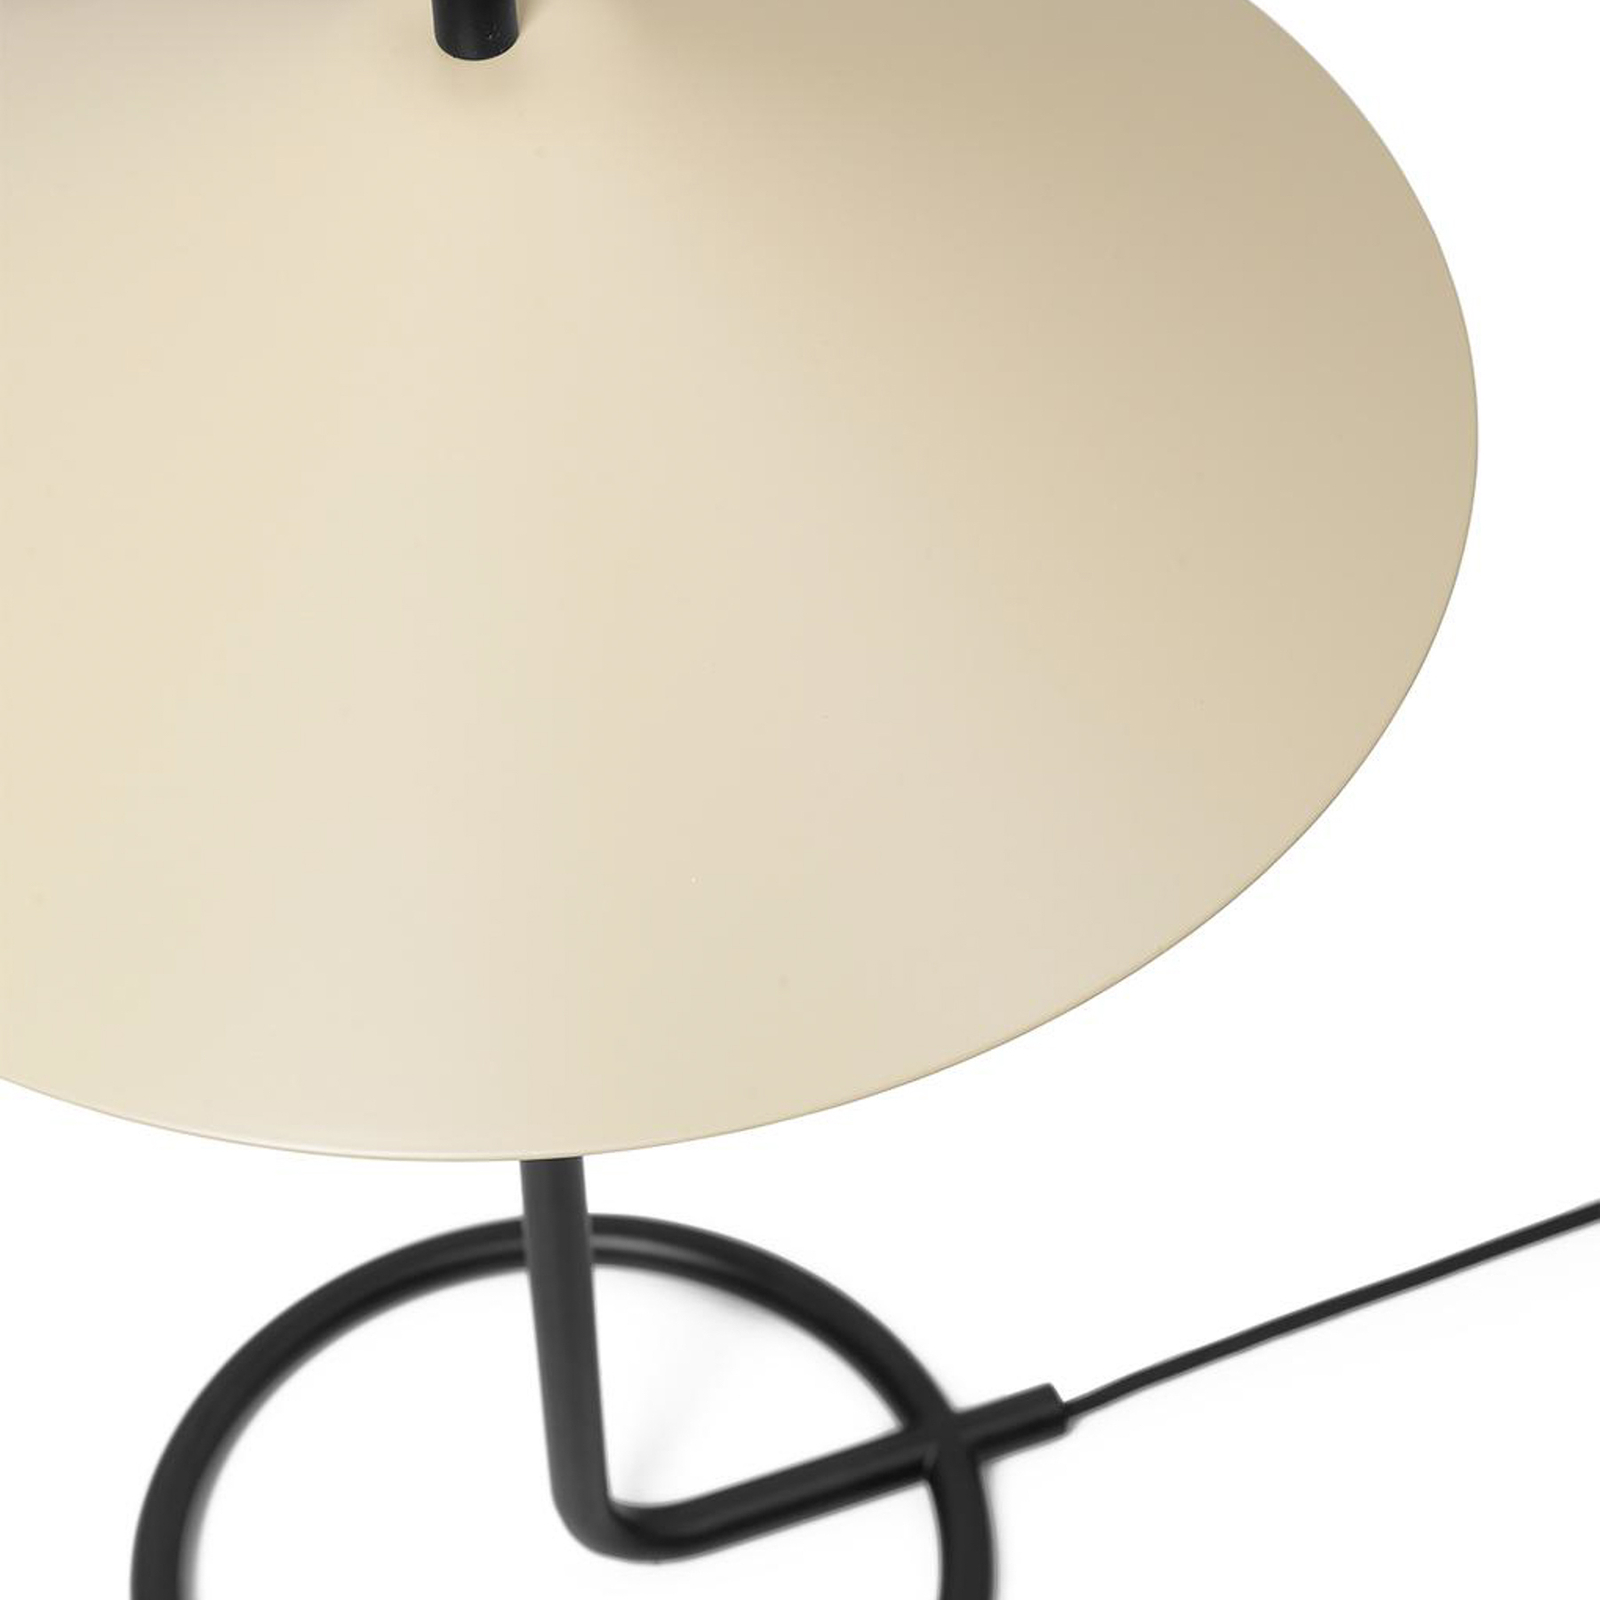 ferm LIVING Filo table lamp, beige, round, iron, 43 cm